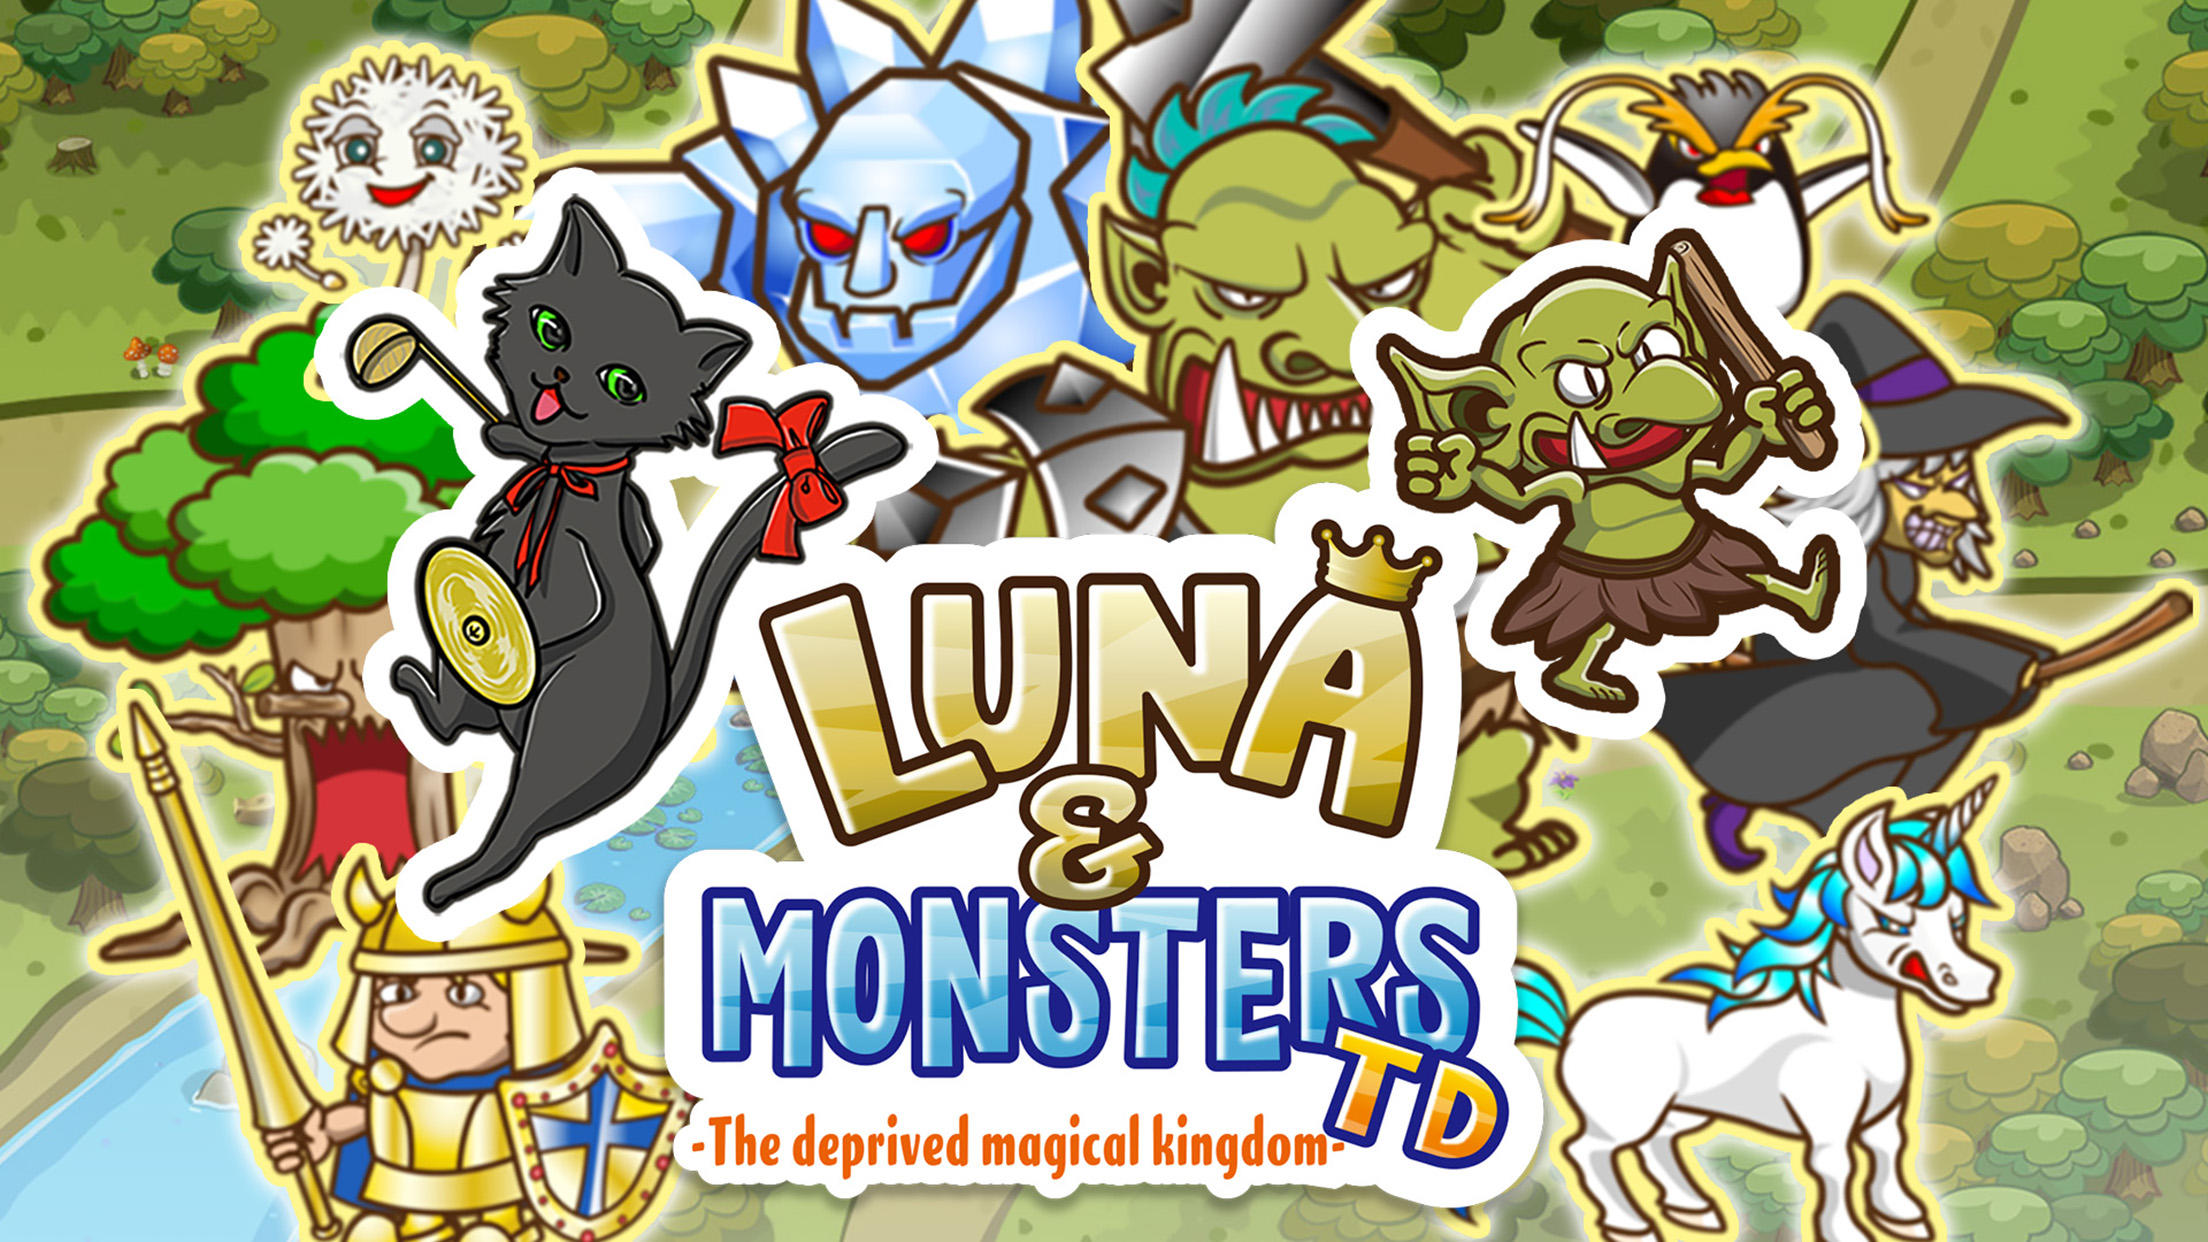 Screenshot 1 of Luna & Monsters မျှော်စင်ကာကွယ်ရေး 